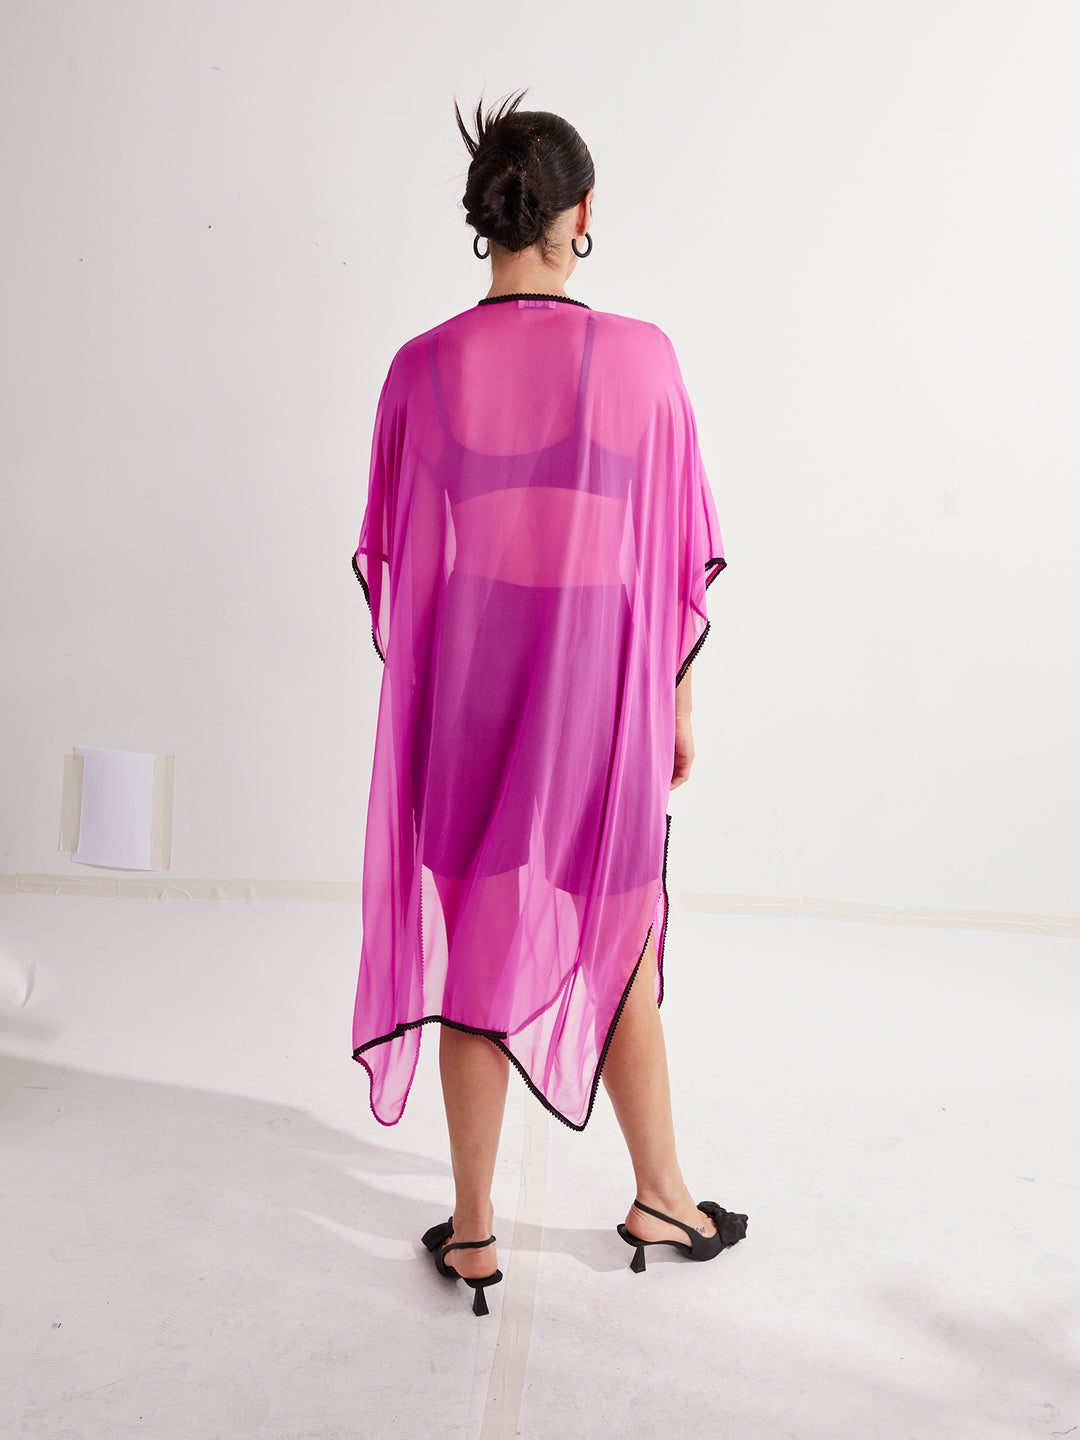 Silk Kimono Shawl in Hot Pink